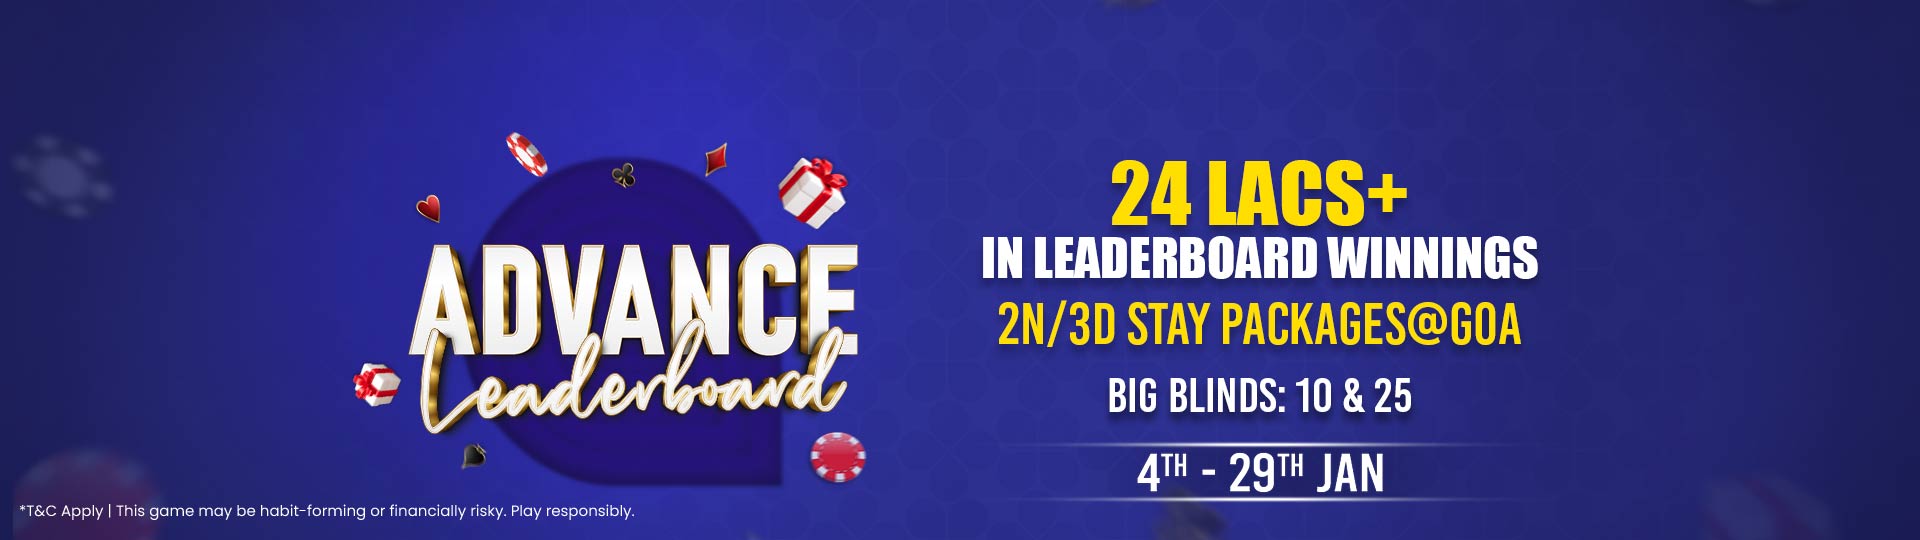 Adda52|Online|Poker|Advance Leaderboards|January